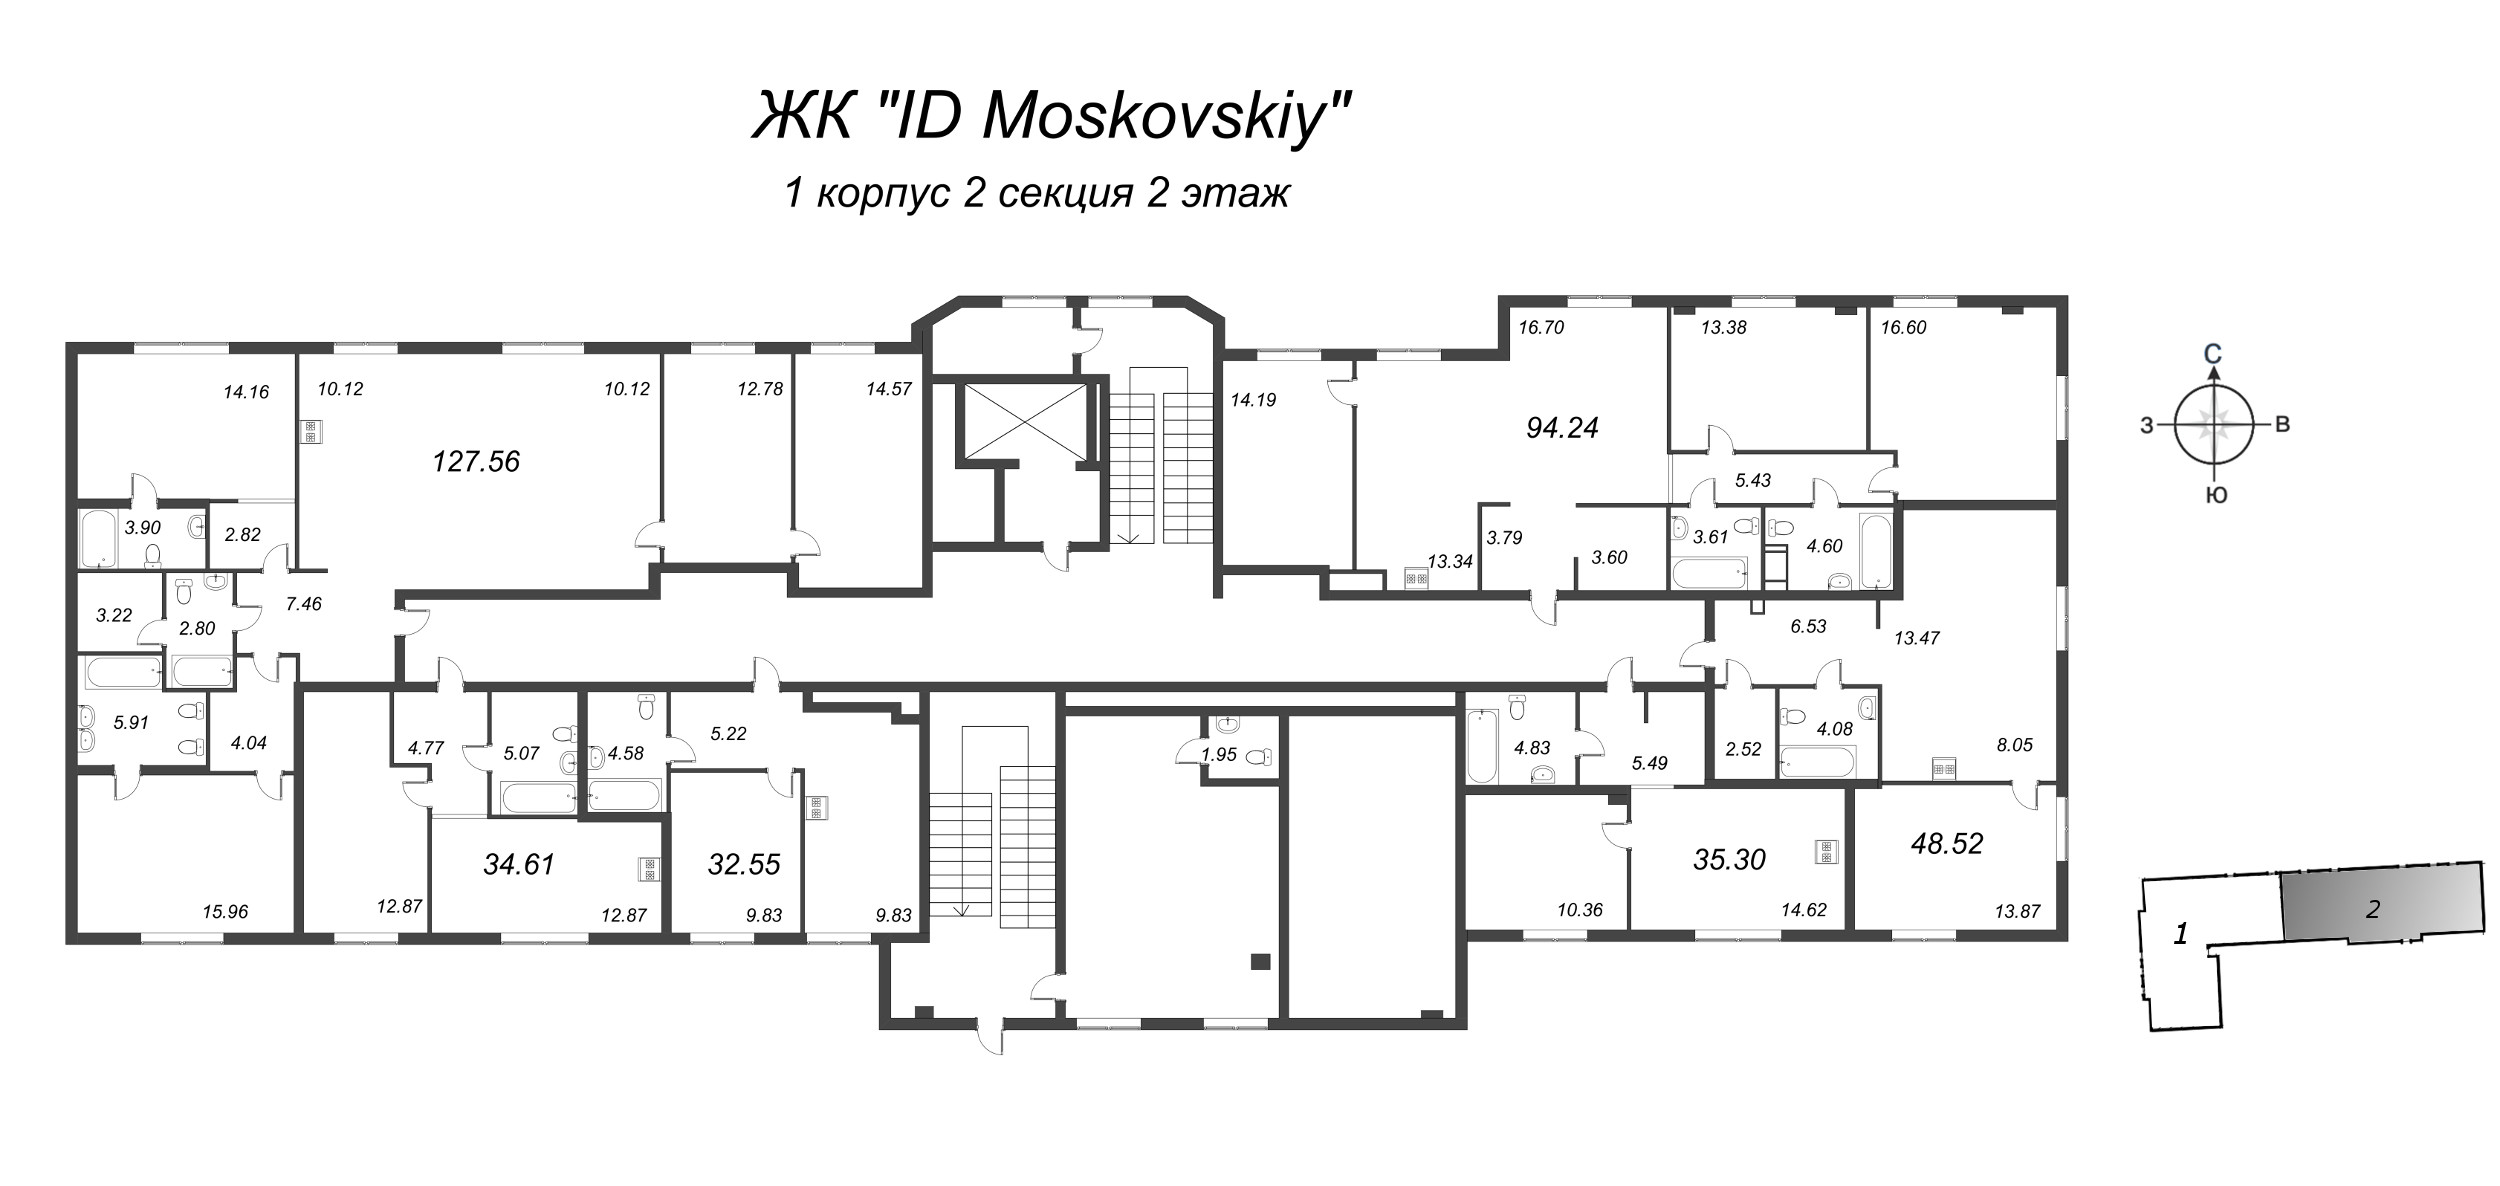 4-комнатная (Евро) квартира, 94.24 м² - планировка этажа